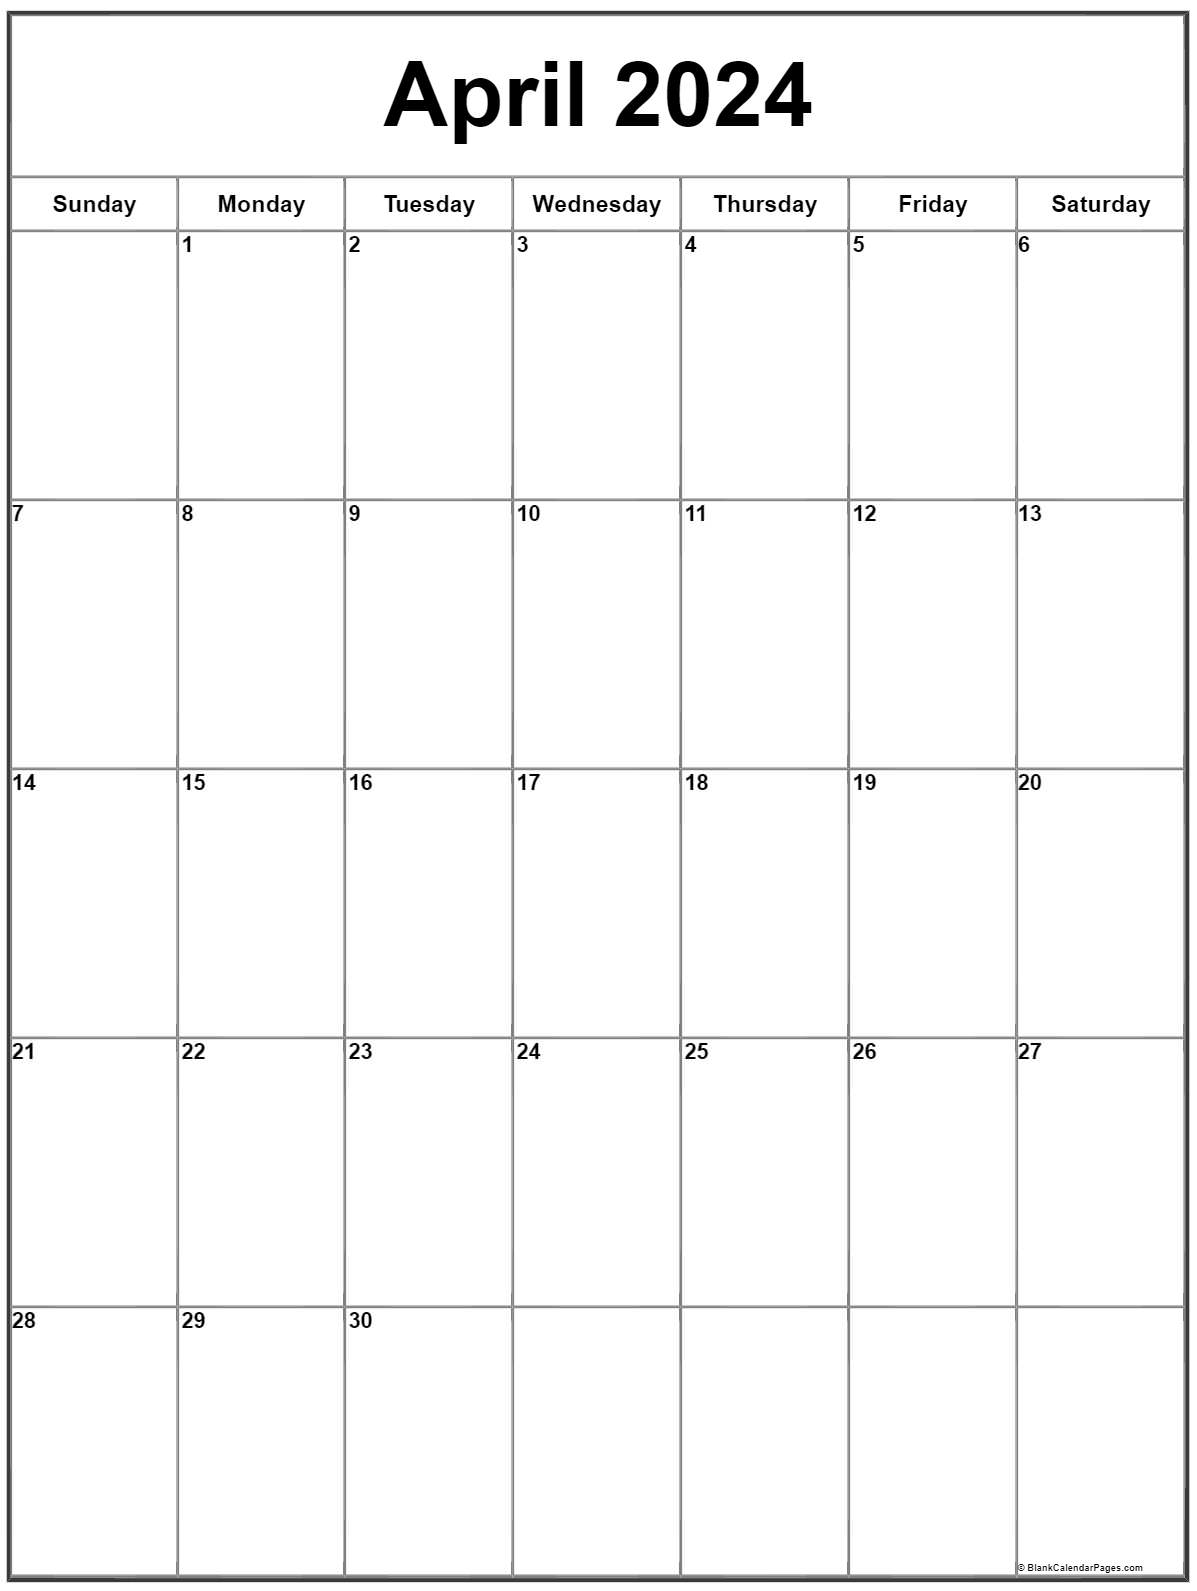 april-2023-calendar-vertical-get-latest-map-update